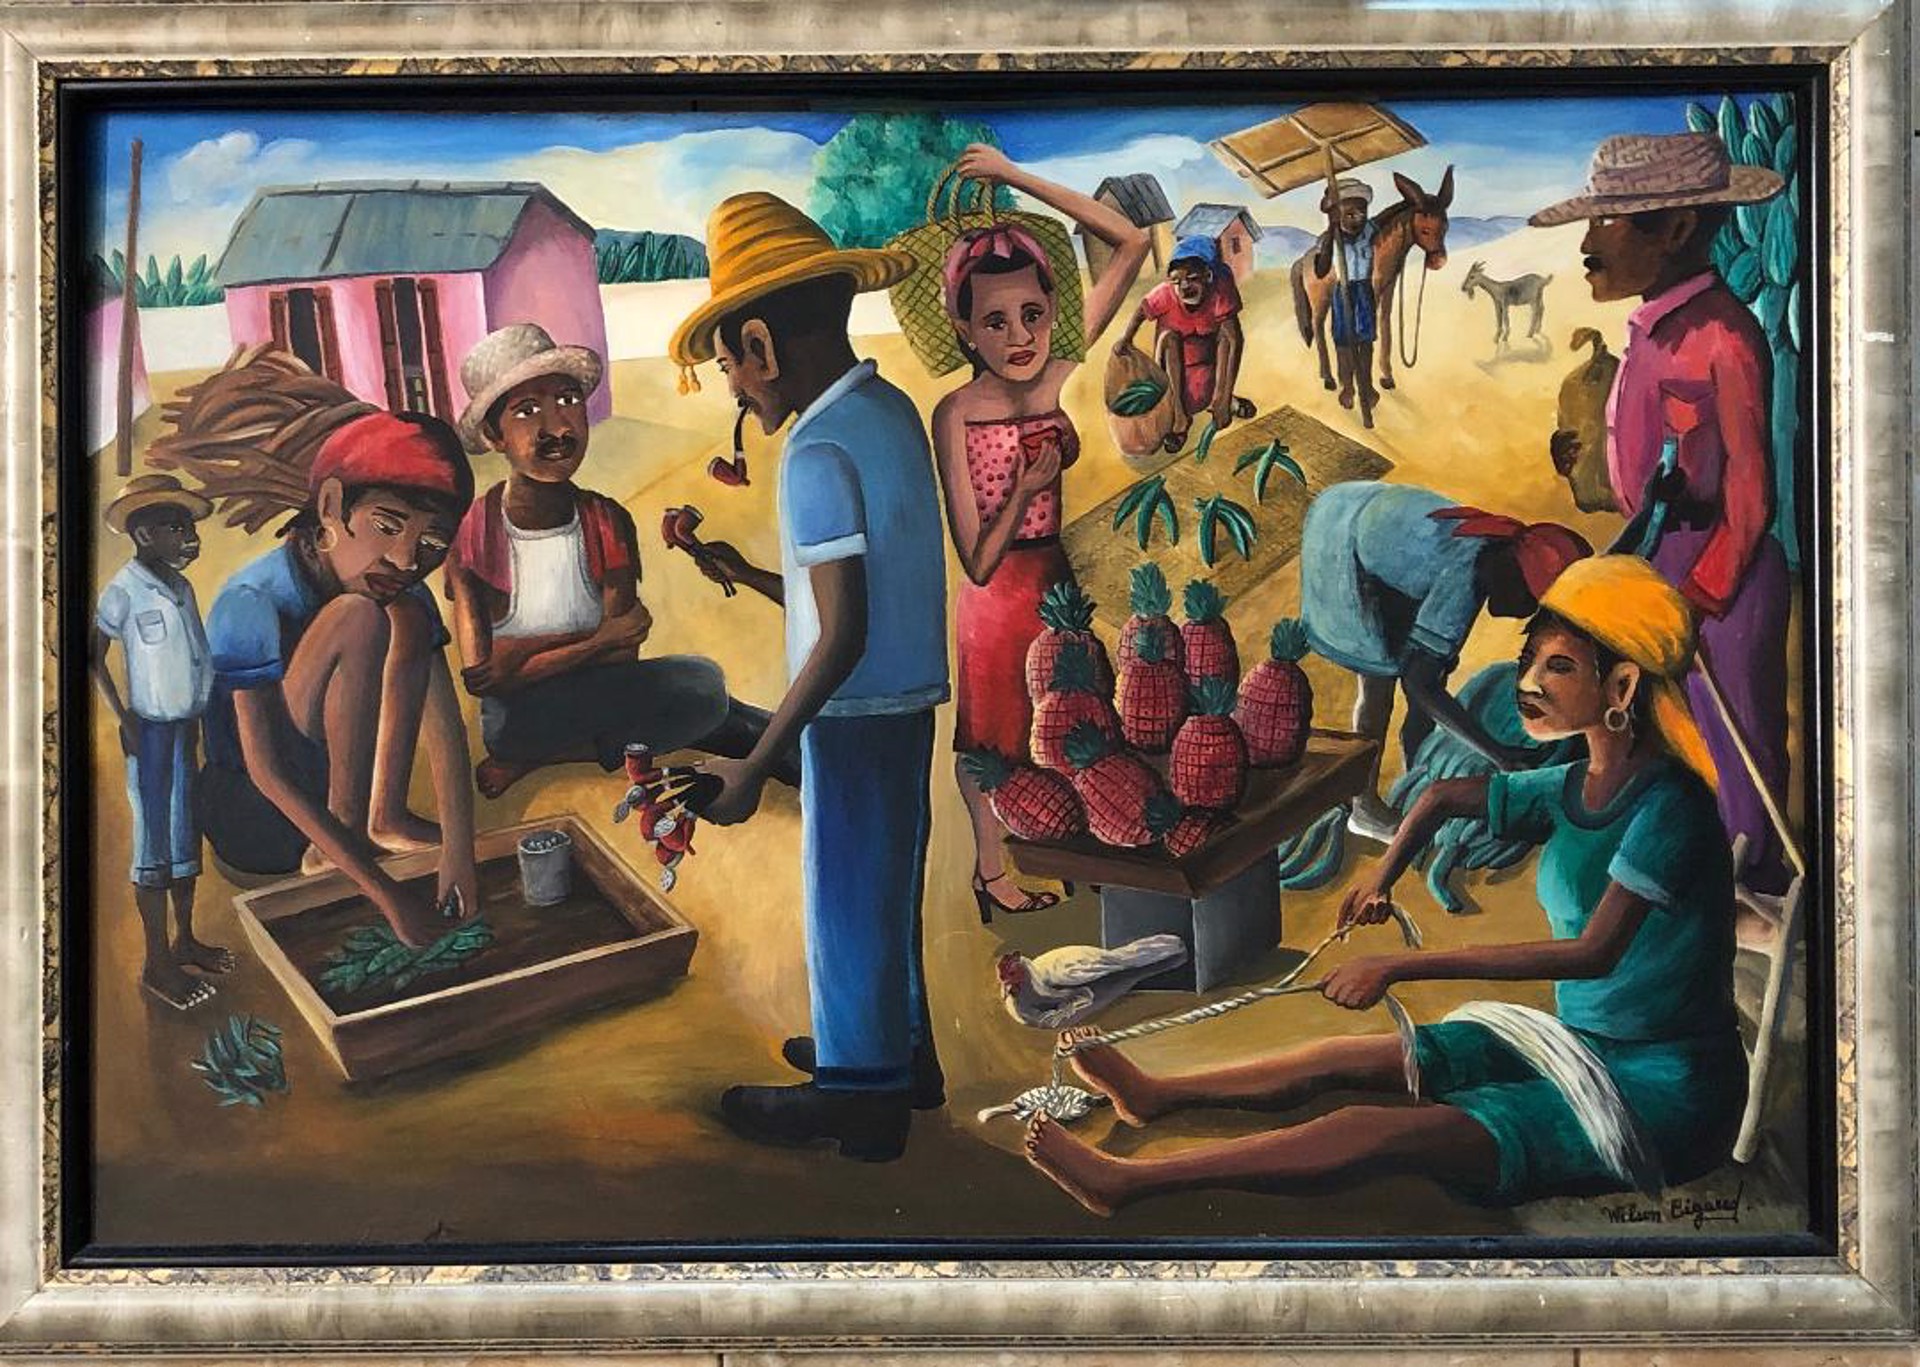 Market Scene by Wilson Bigaud (Haitian, 1931-2010)